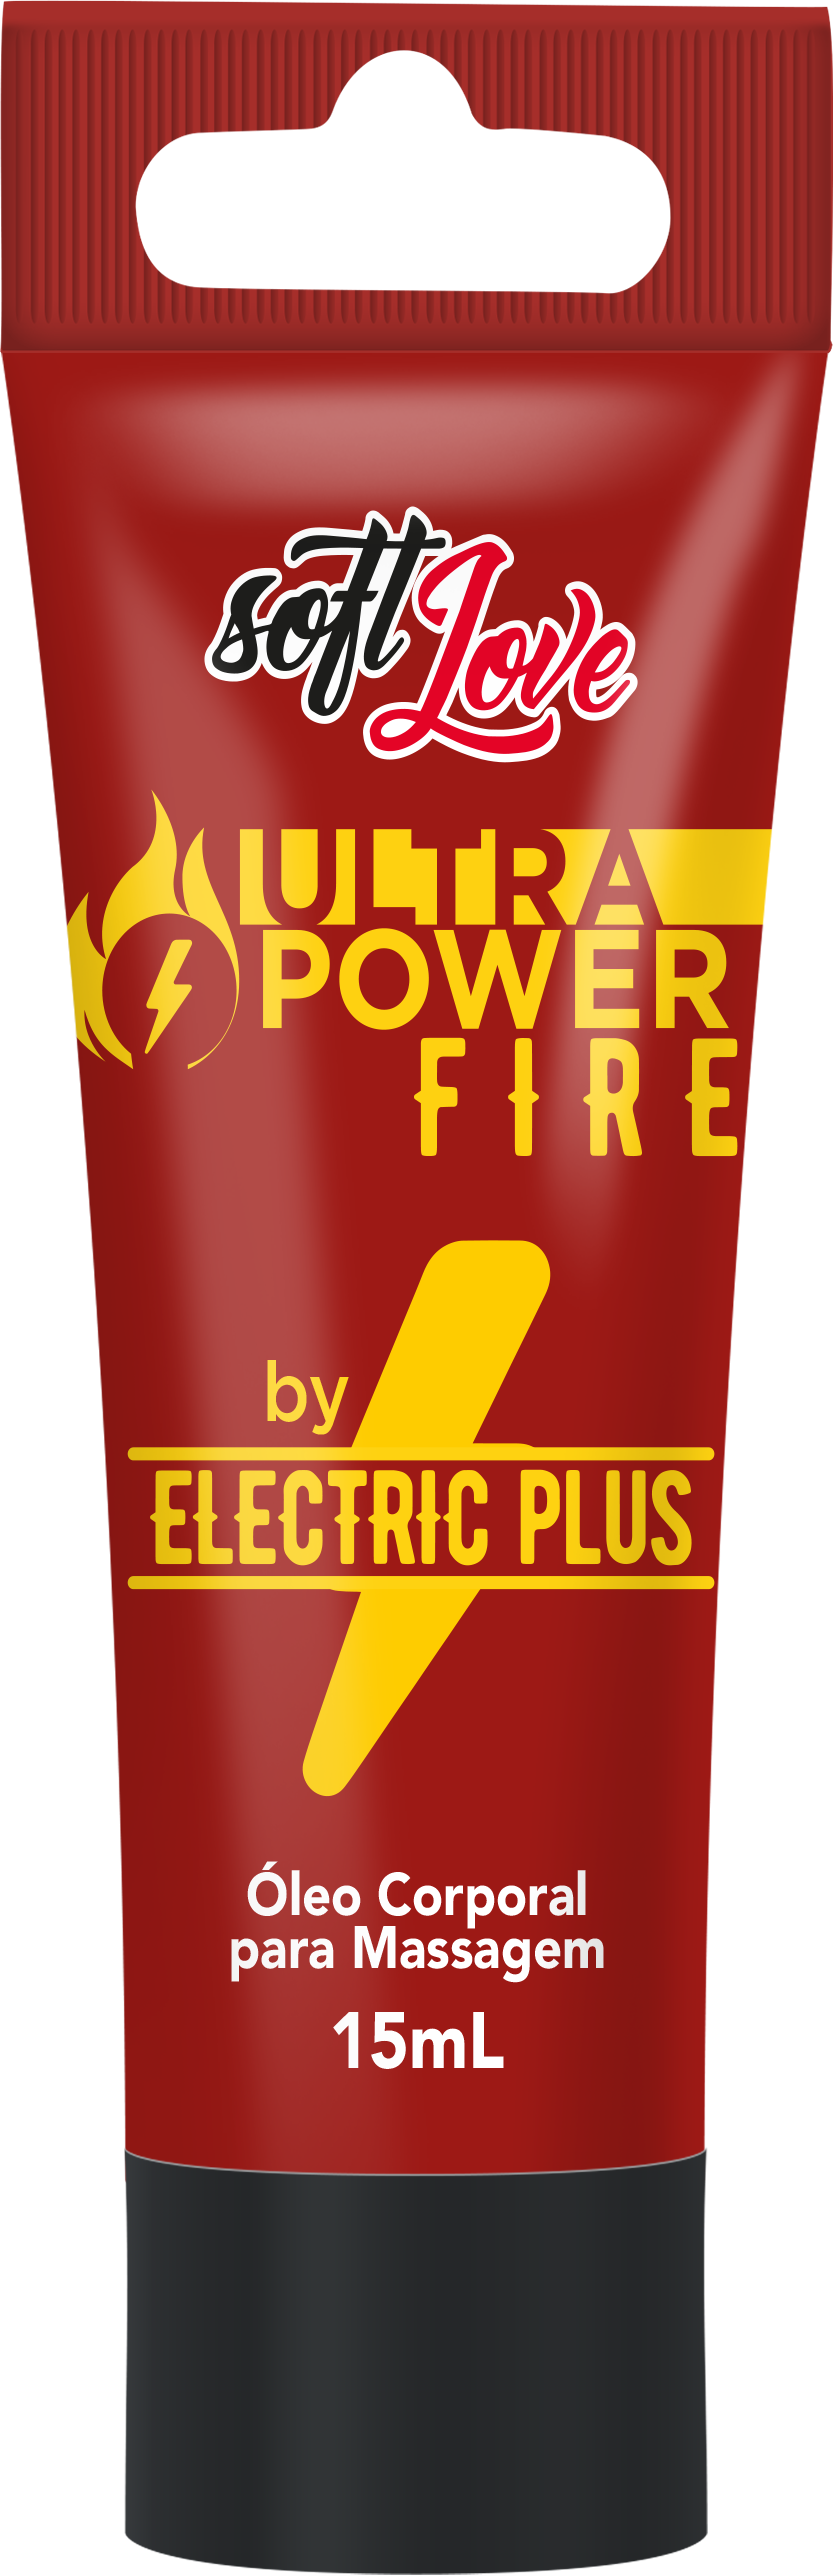 Ultra Power Fire Vibrador Líquido Bisnaga By Eletric Plus 15ml Soft Love